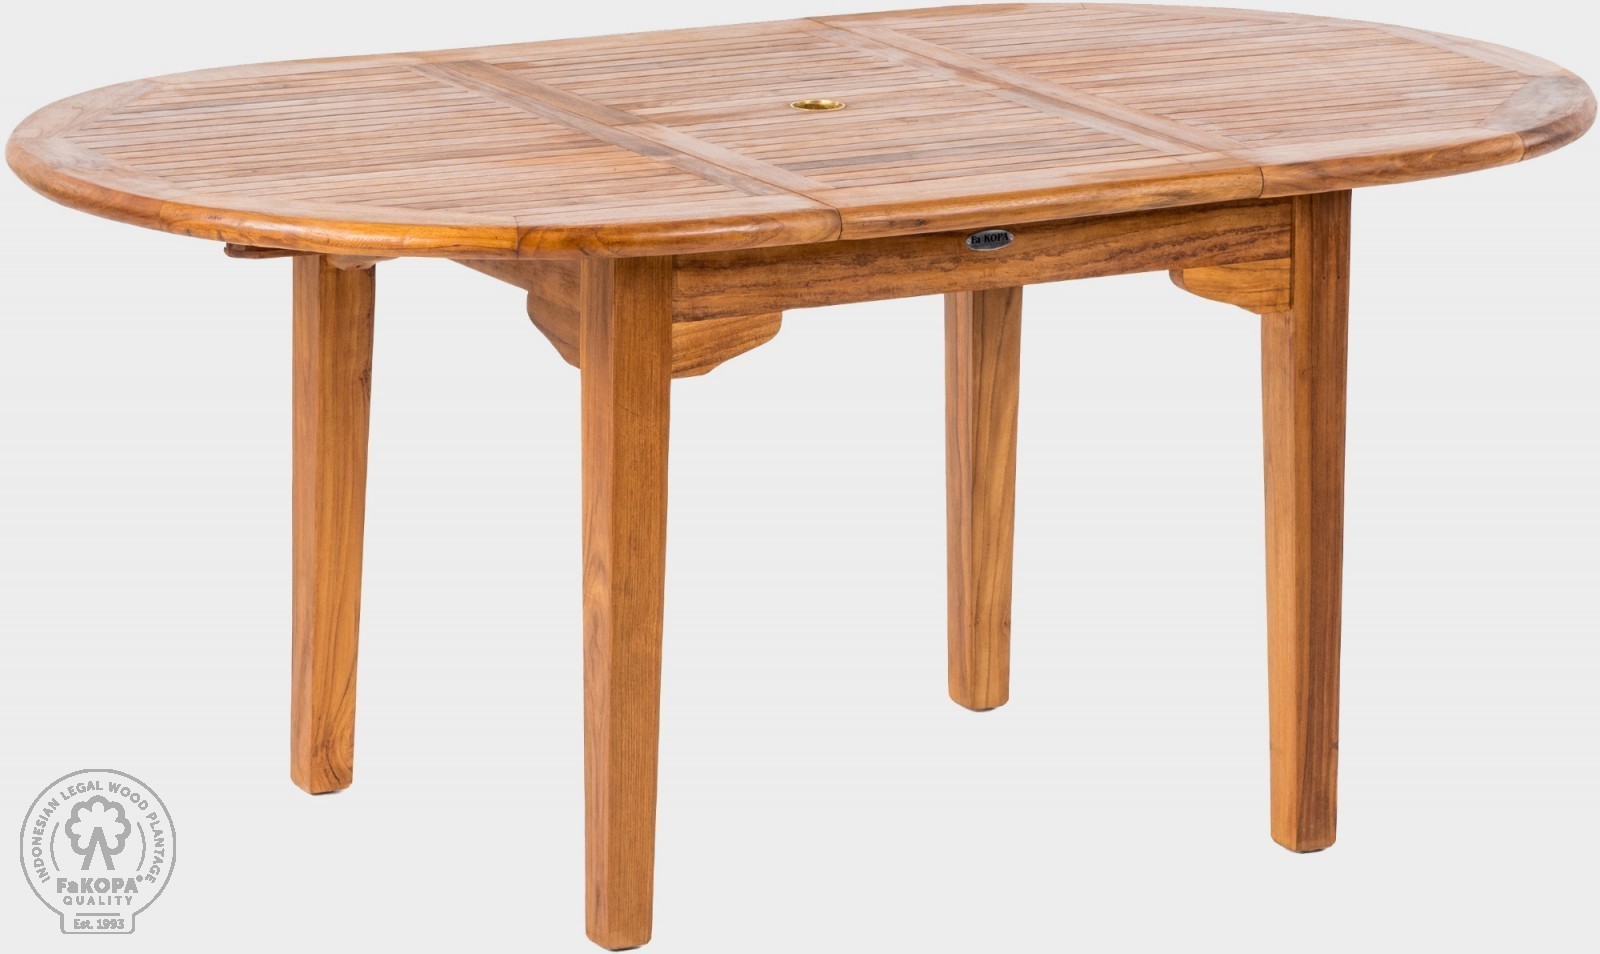 FaKOPA s. r. o. ELEGANTE - rozkládací oválný teakový stůl 120 x 130-180 cm, teak